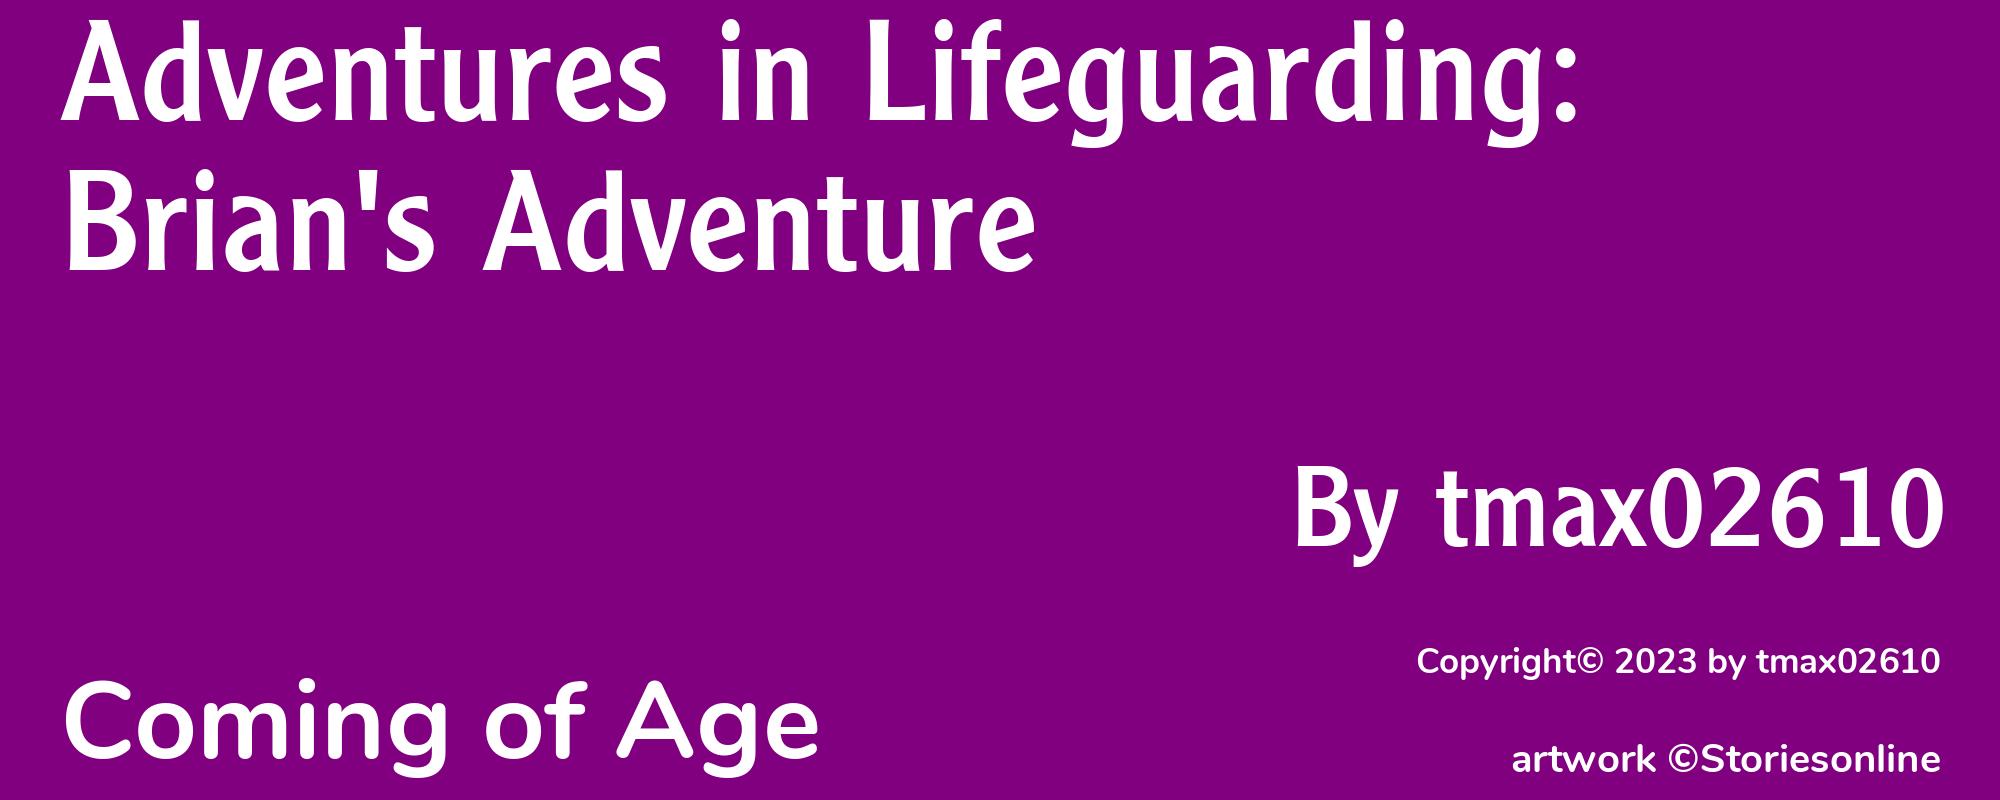 Adventures in Lifeguarding: Brian's Adventure - Cover